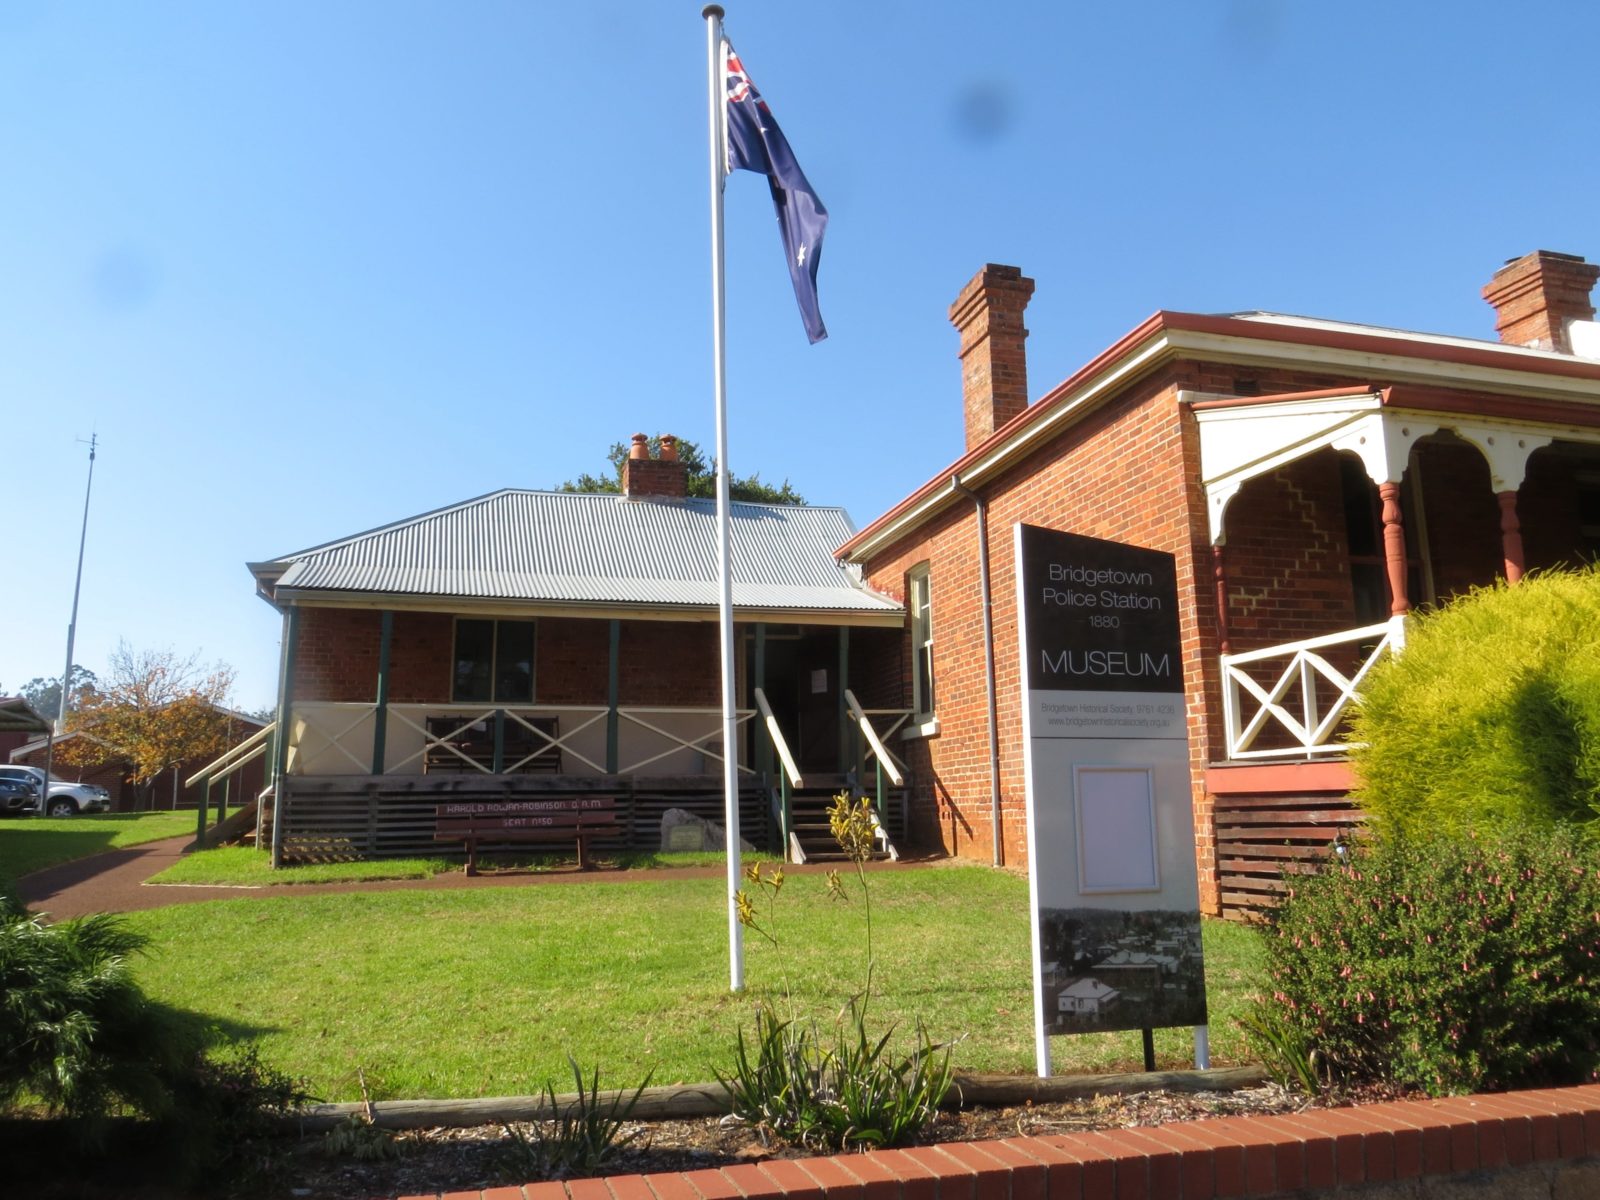 Bridgetown Police Station Museum 1880, Bridgetown, Western Australia